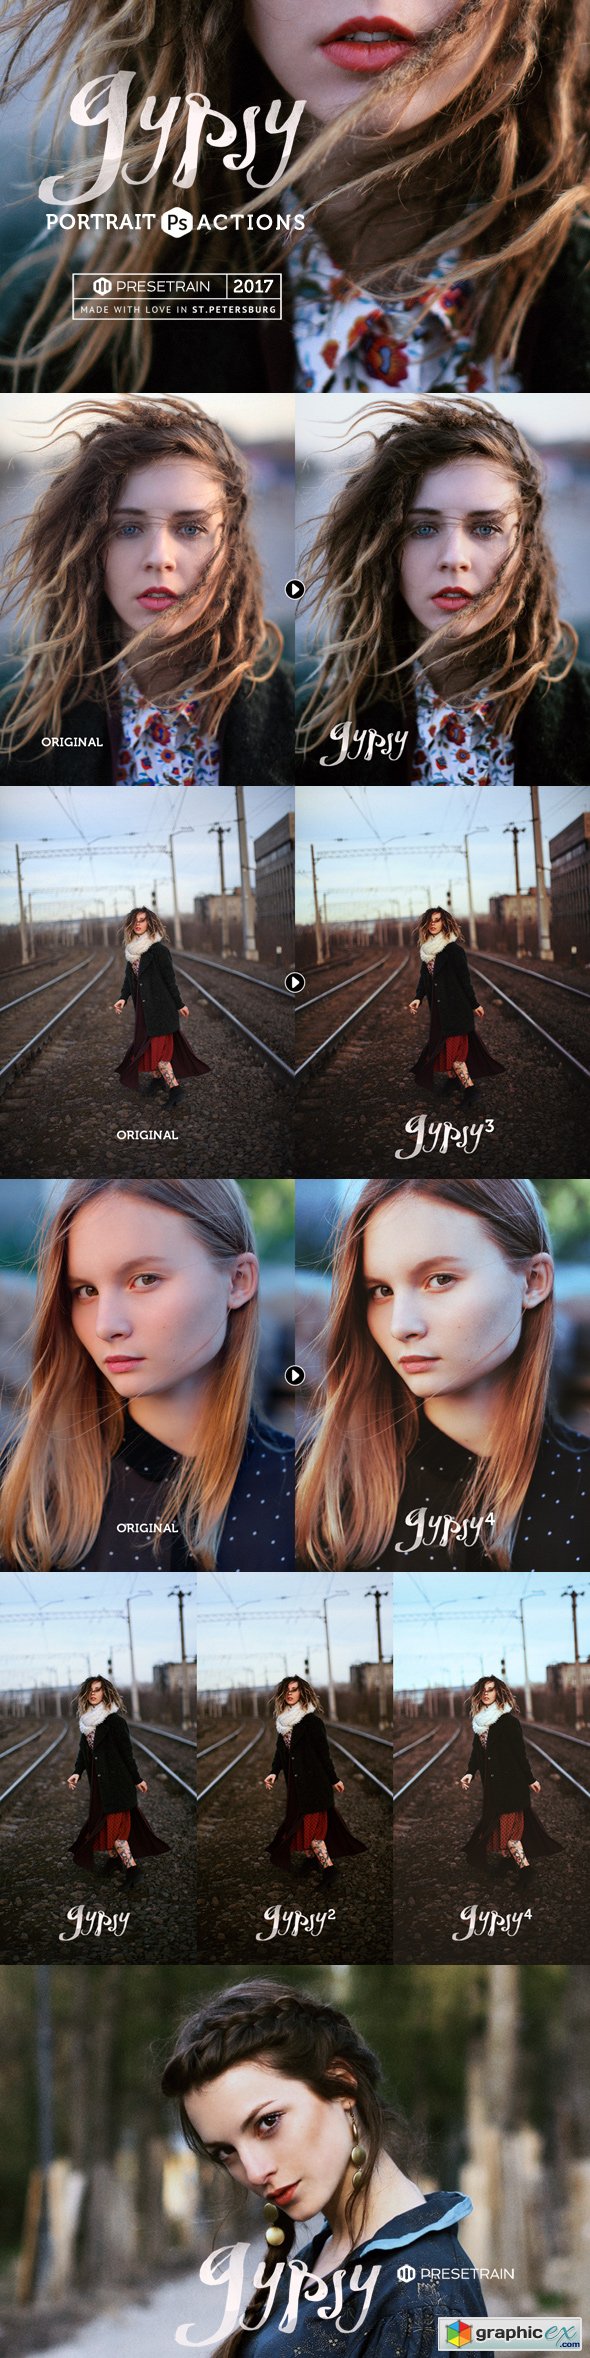 Gypsy Portrait Photoshop Actions